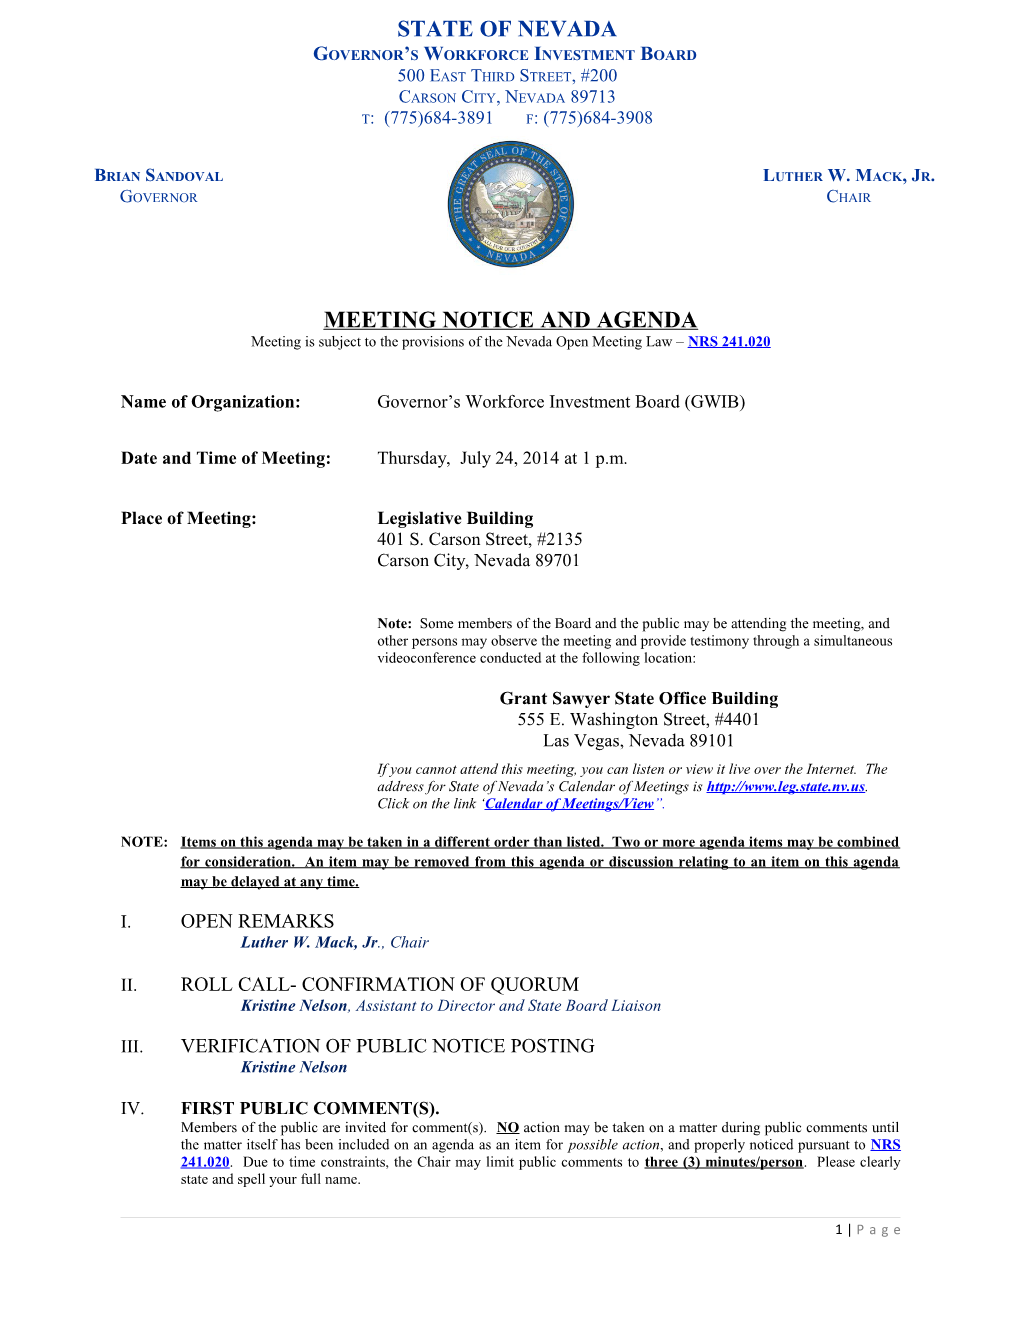 Meeting Notice and Agenda s3